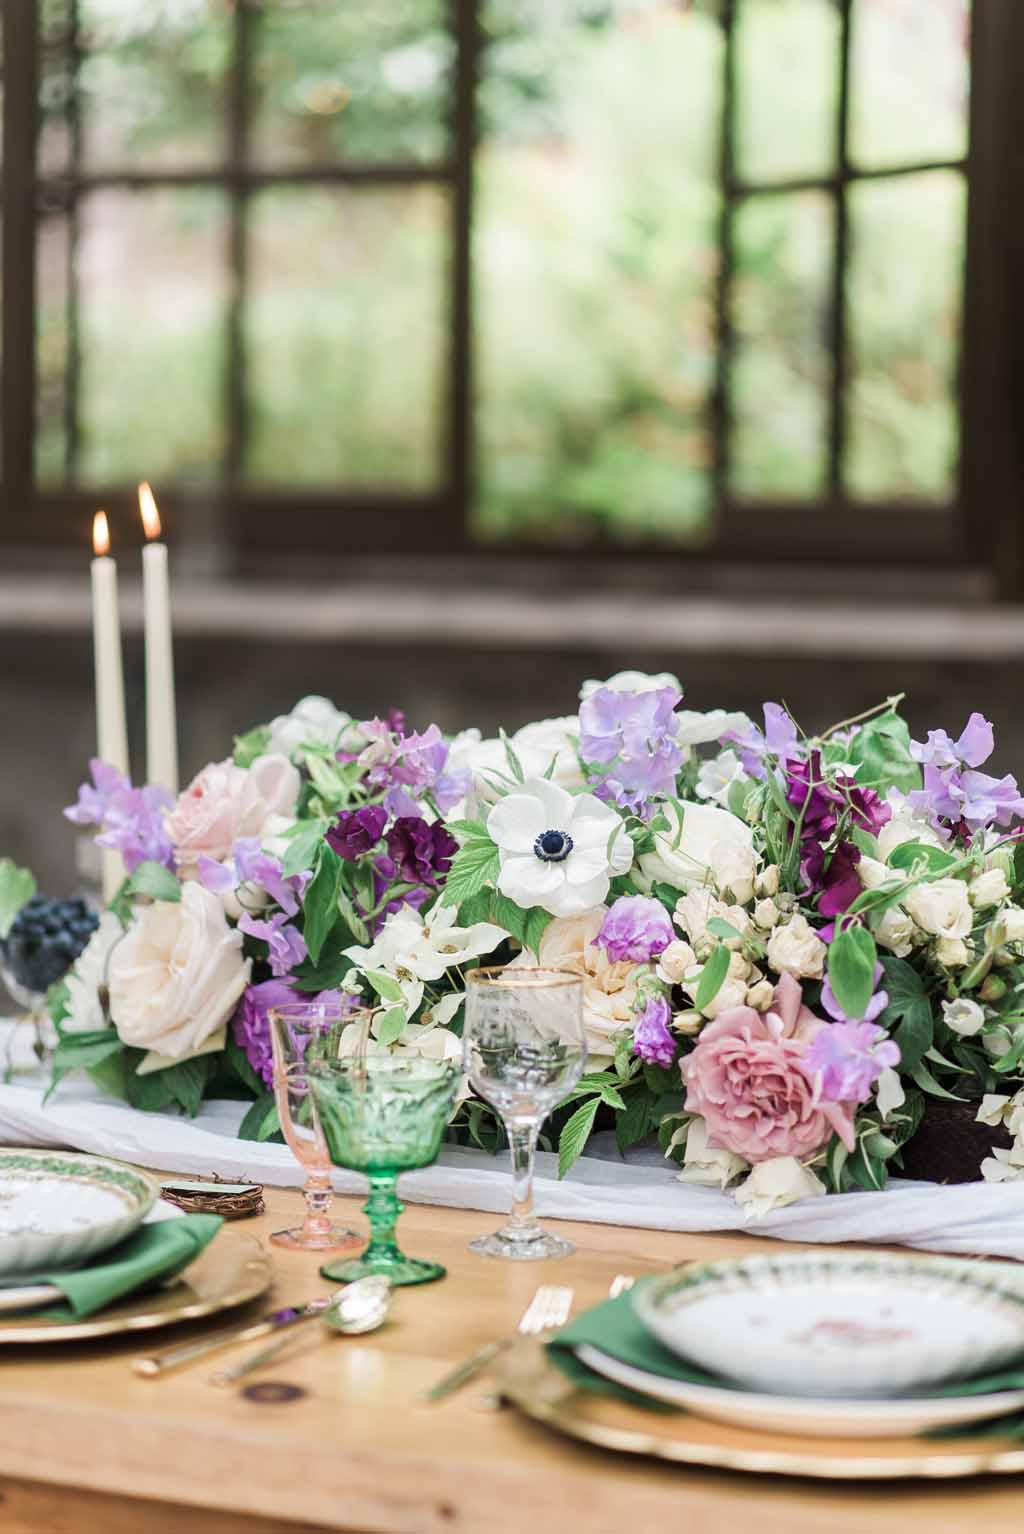 Bella Fiori Florist - Bella Luna Farms - Becca Jones Photography - Snohomish Washington - centerpiece of purple, lavender, and white flowers - garden roses, sweet peas, anemones